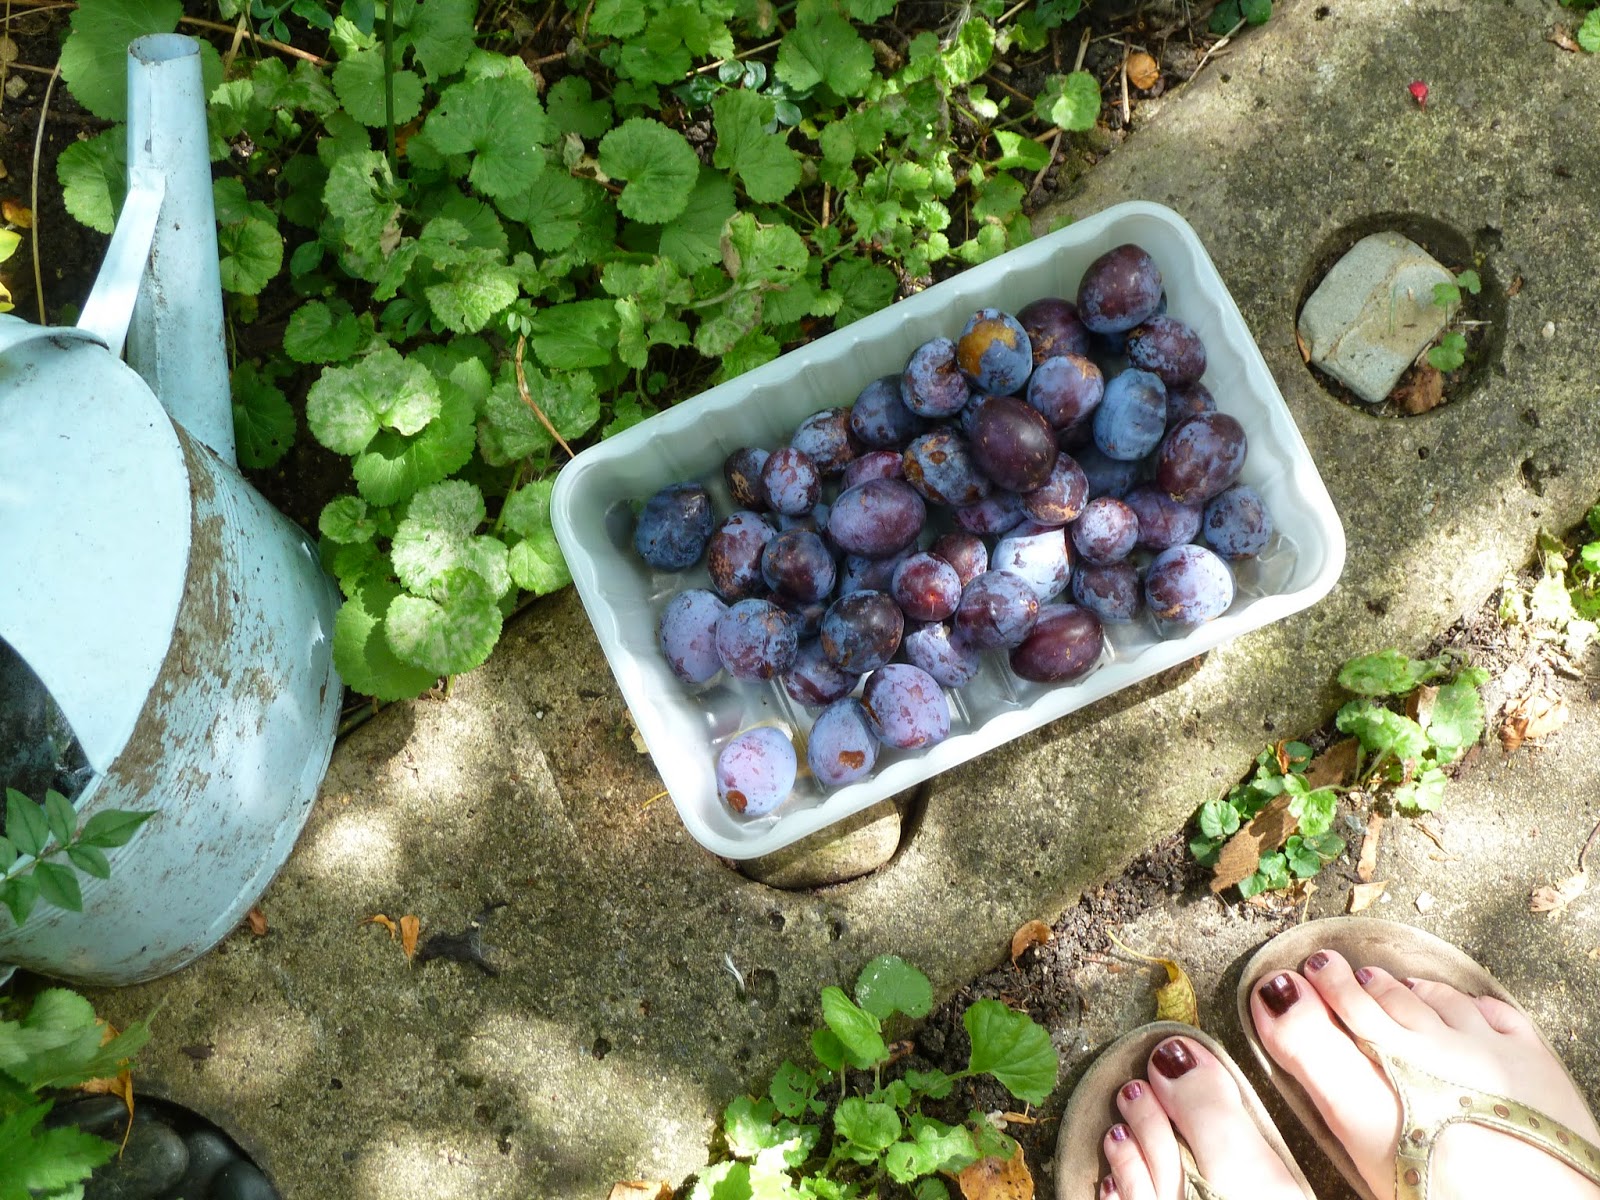 Gathering plums